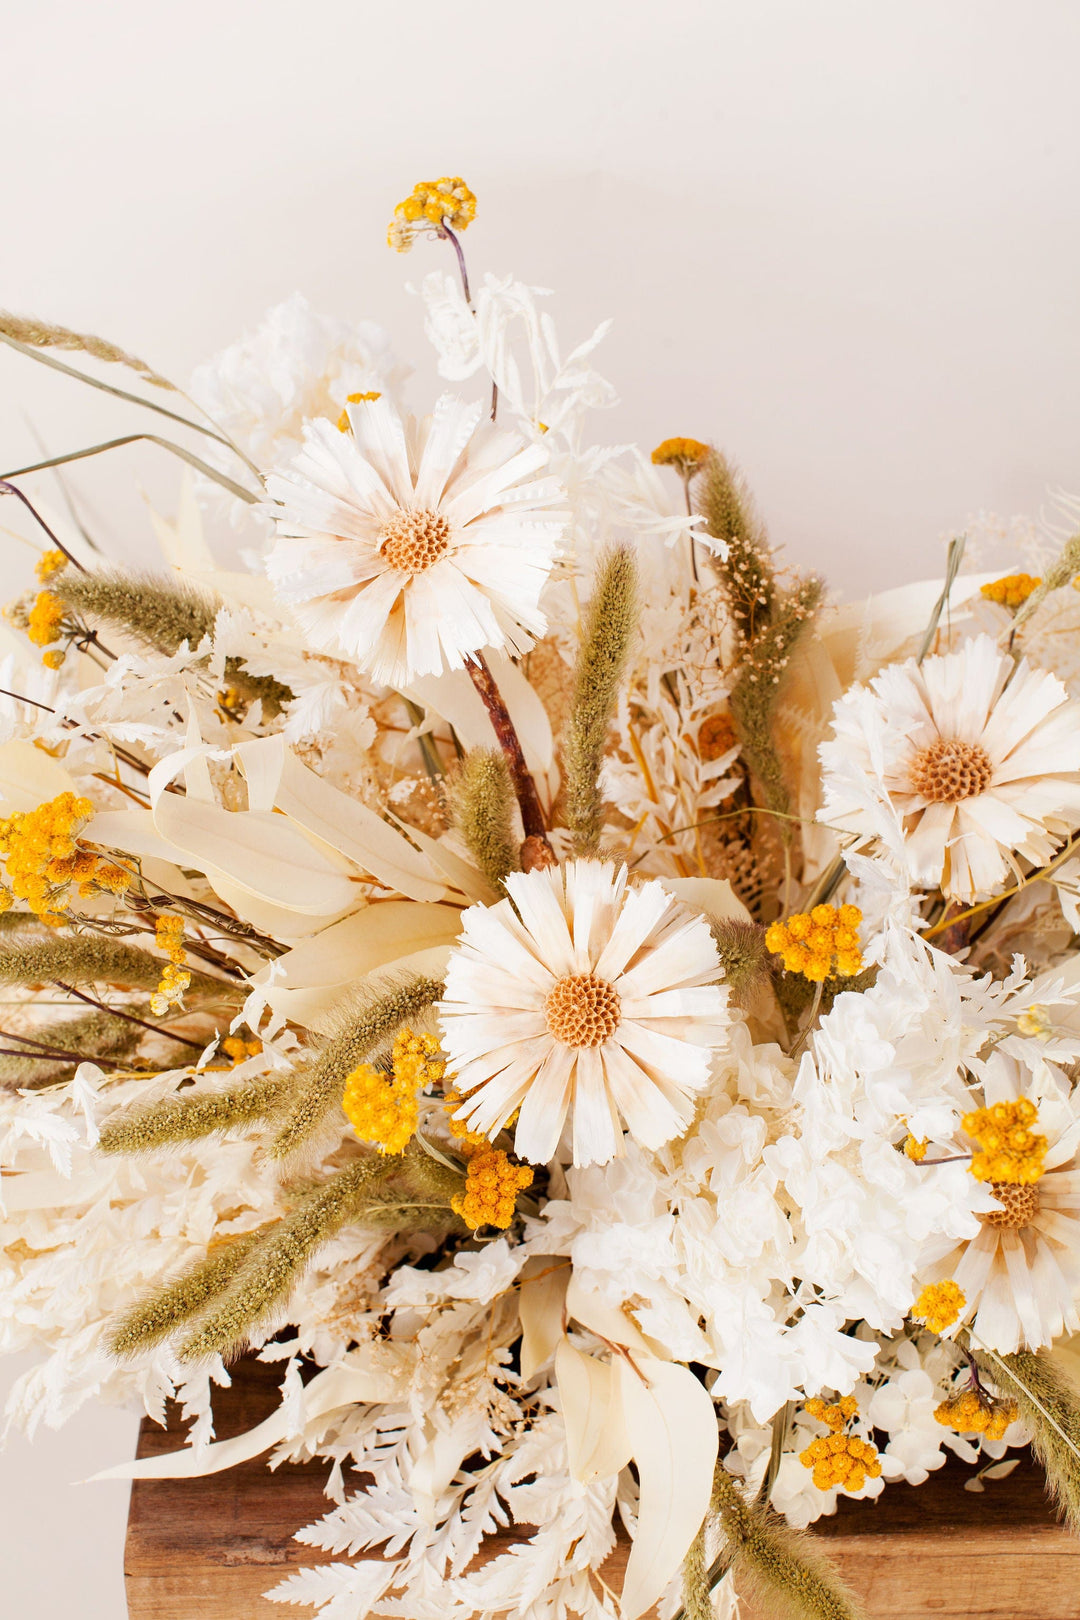 Dried Daisy Flowers